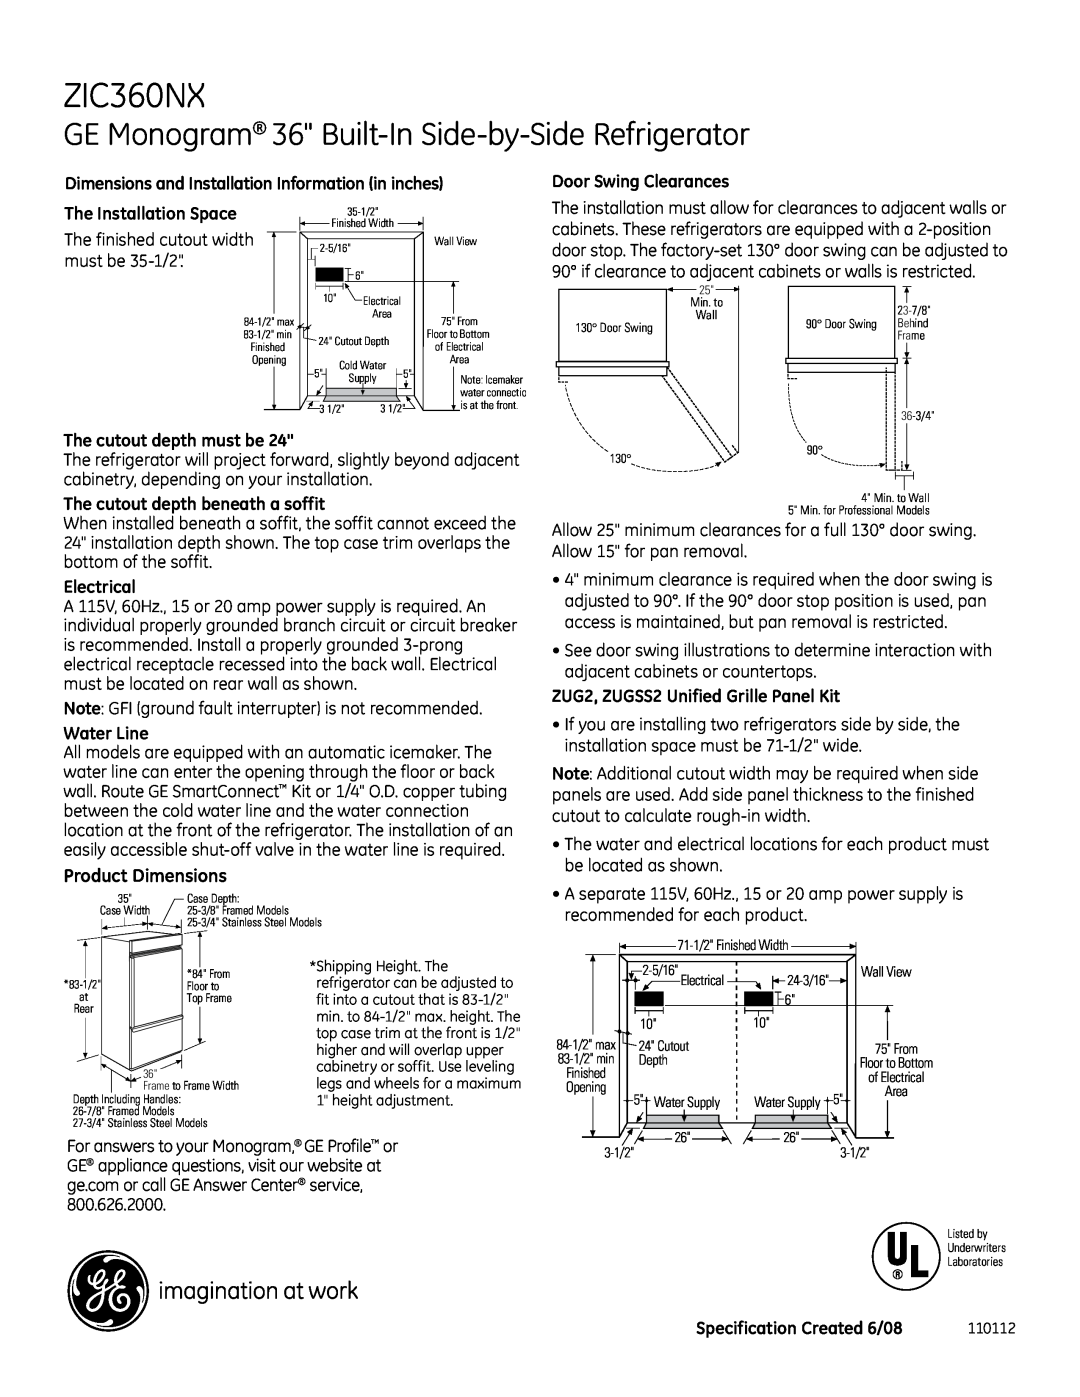 GE ZIC360NX dimensions GE Monogram 36 Built-In Side-by-Side Refrigerator, Product Dimensions 